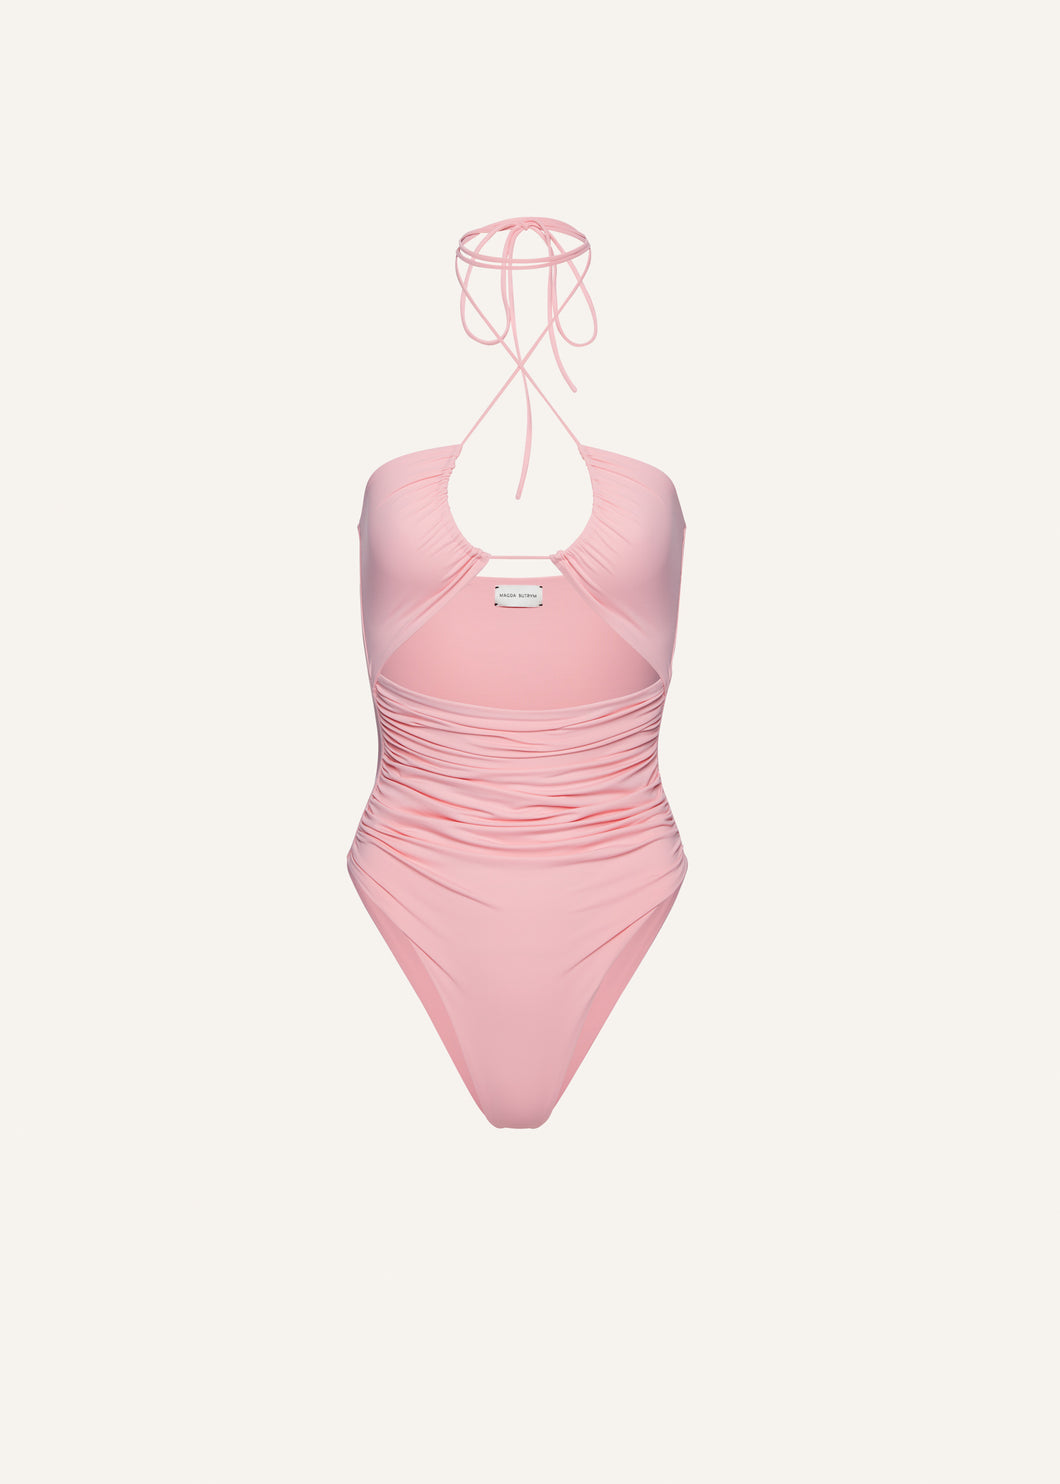 Criss cross halter swimsuit in pink